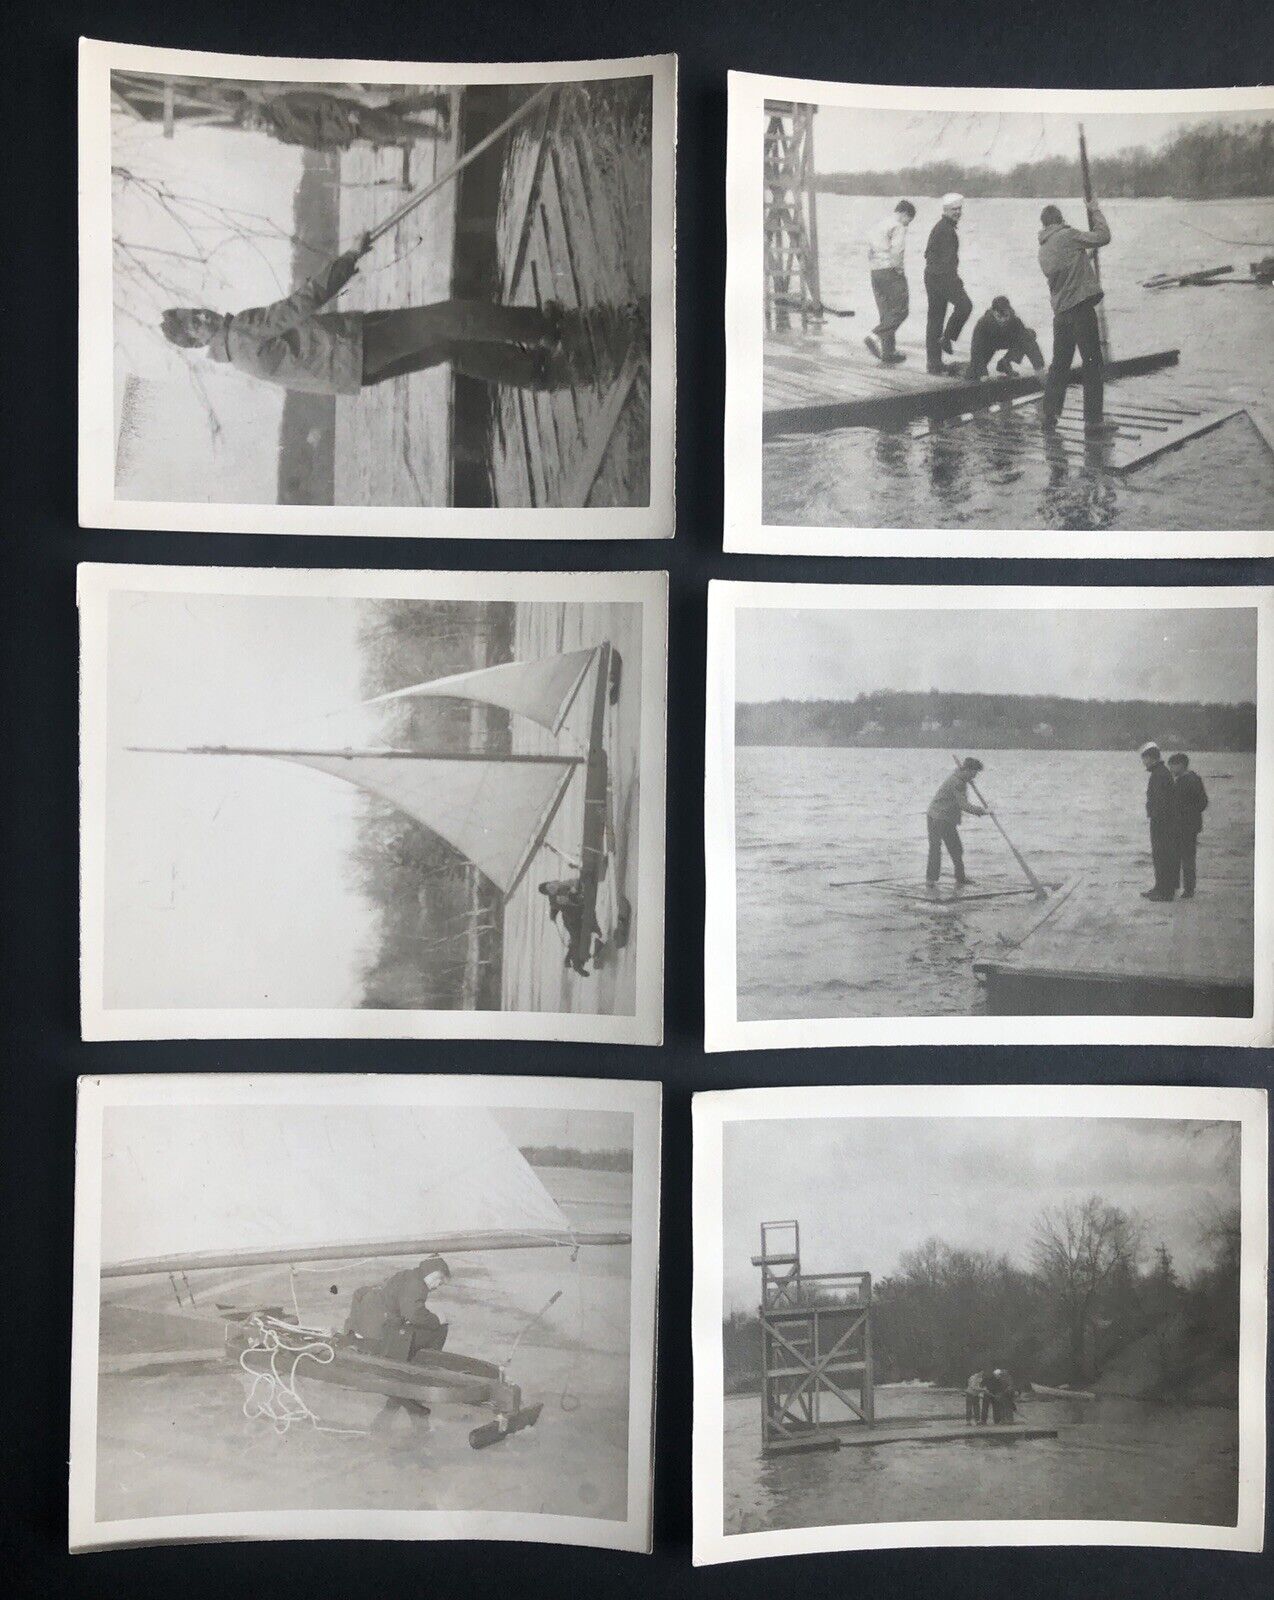 Lot of 6 Photos 1950s Teen Boys Racing Ice Yacht, using Raft on Lake